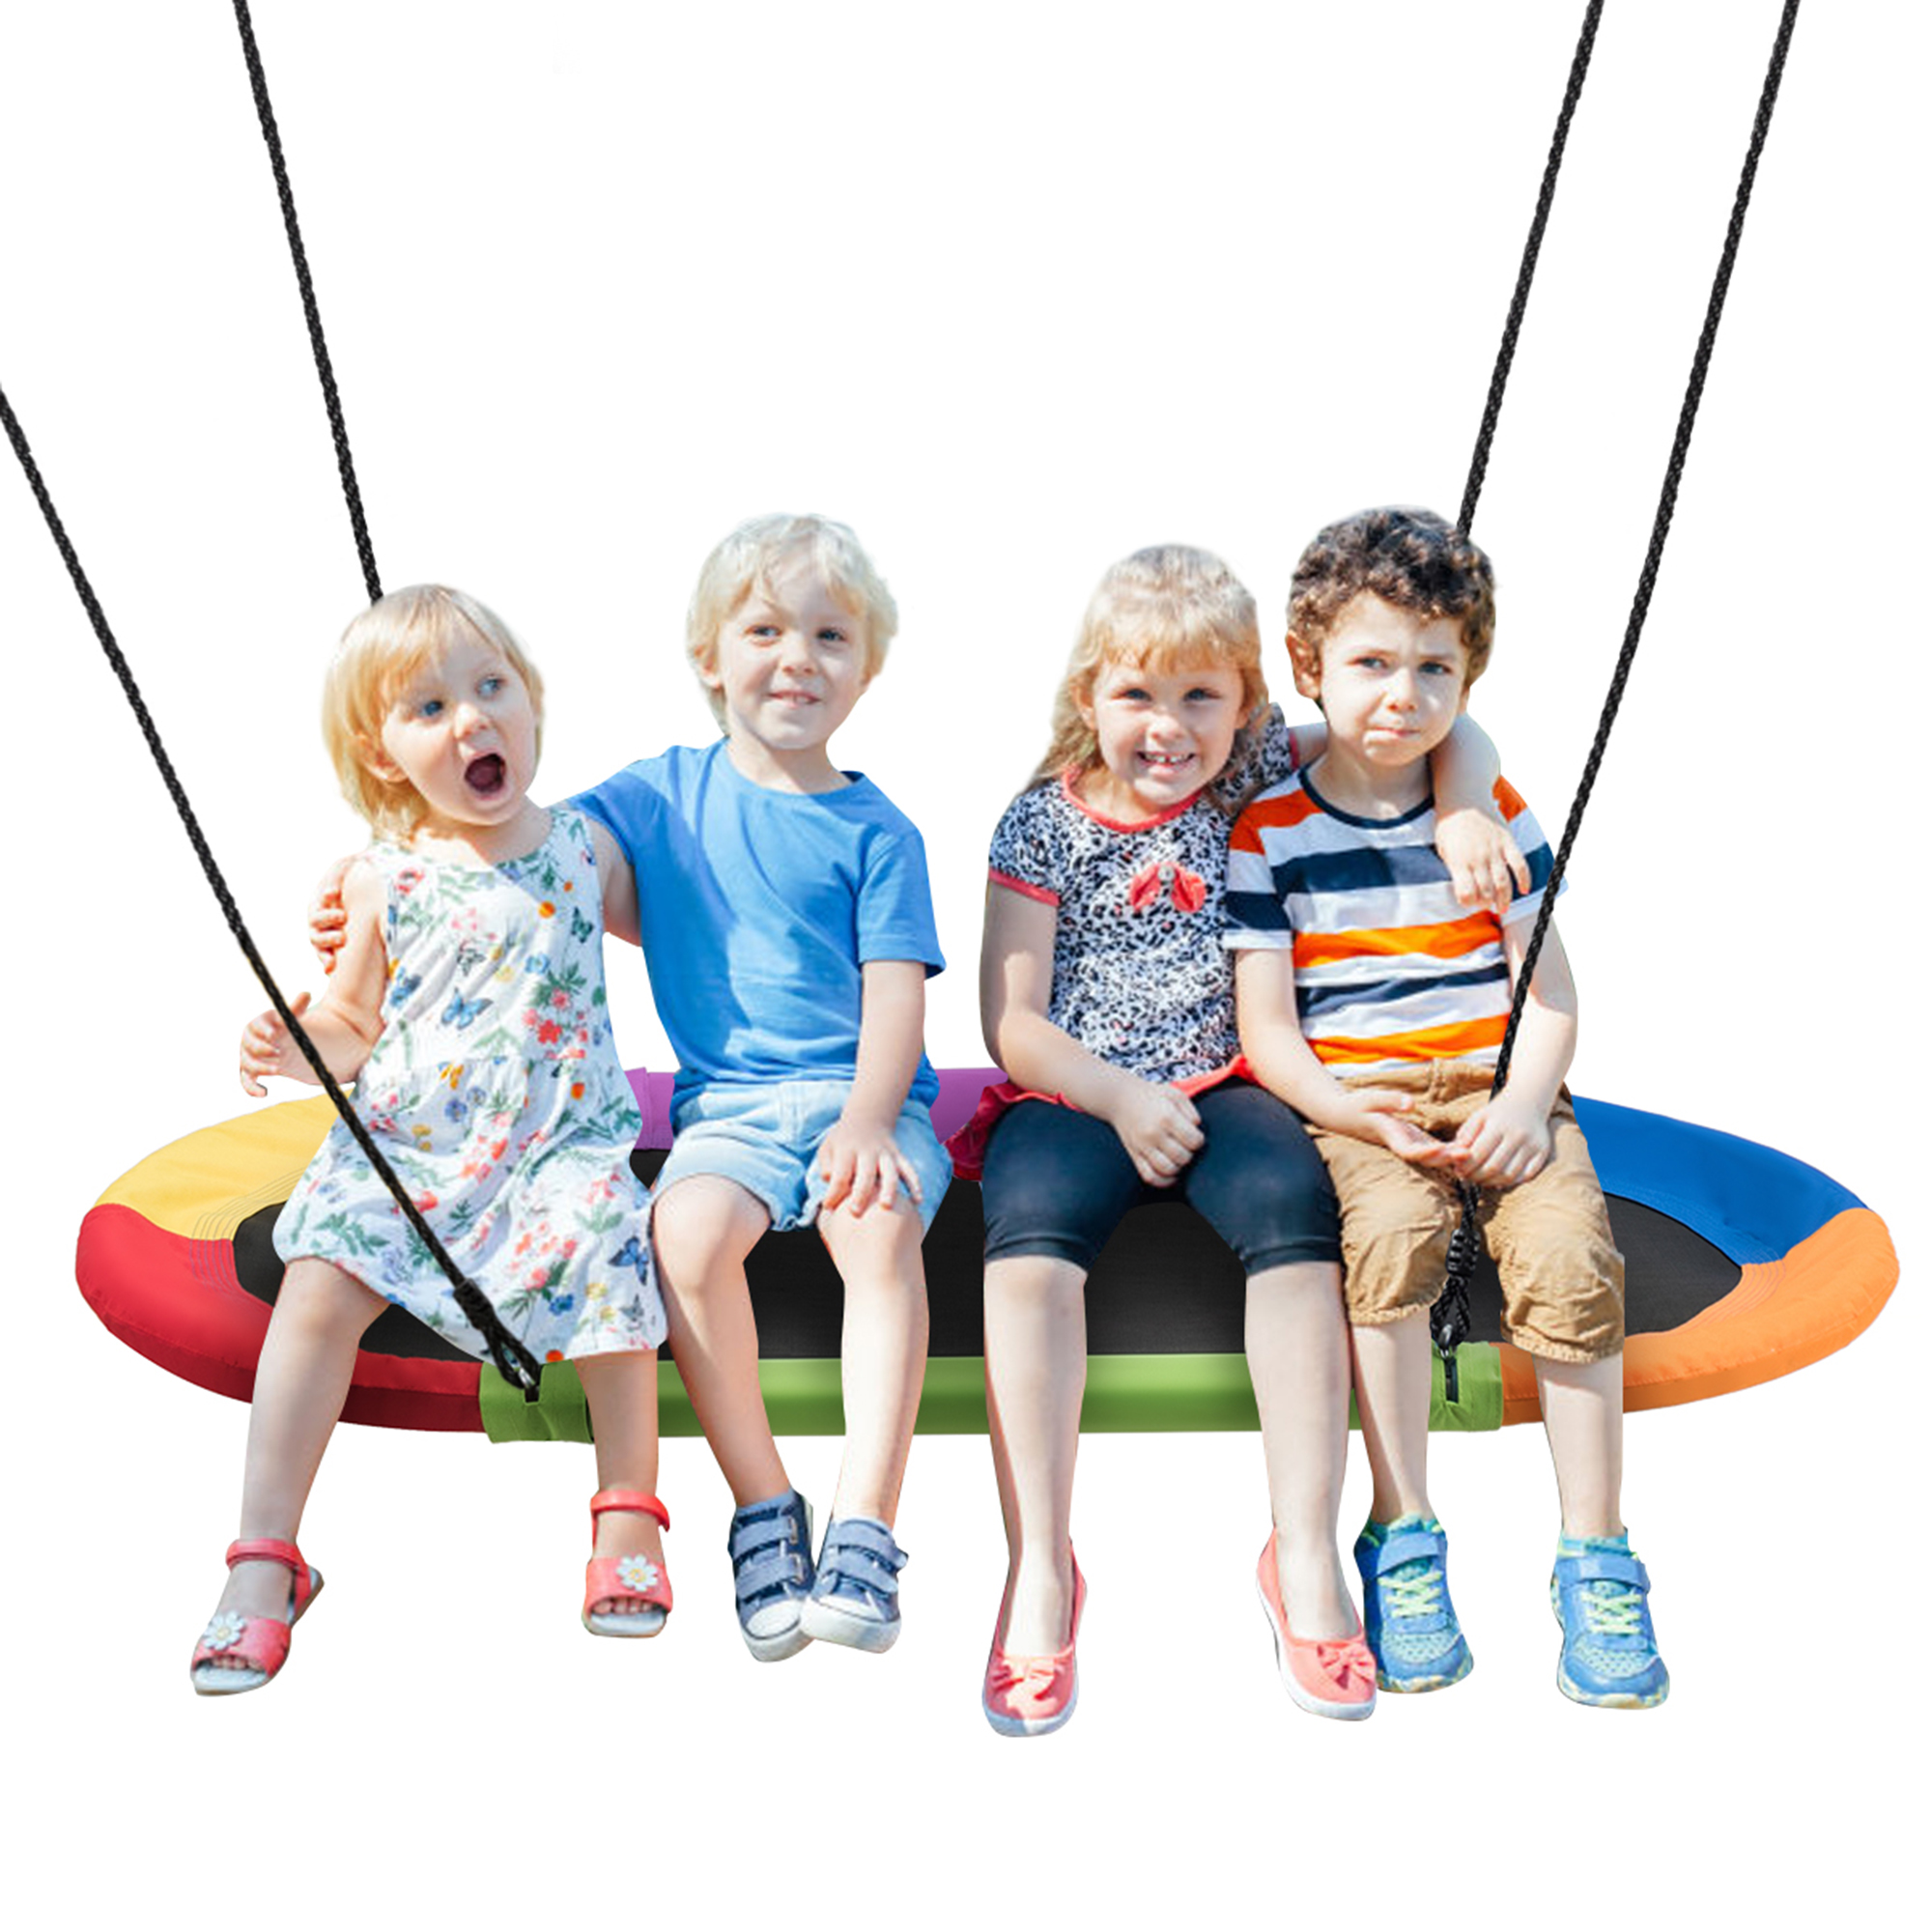 Gymax 60'' Saucer Tree Swing Surf Outdoor Adjustable Kids Giant Oval Platform Swing Set Colorful - image 1 of 10